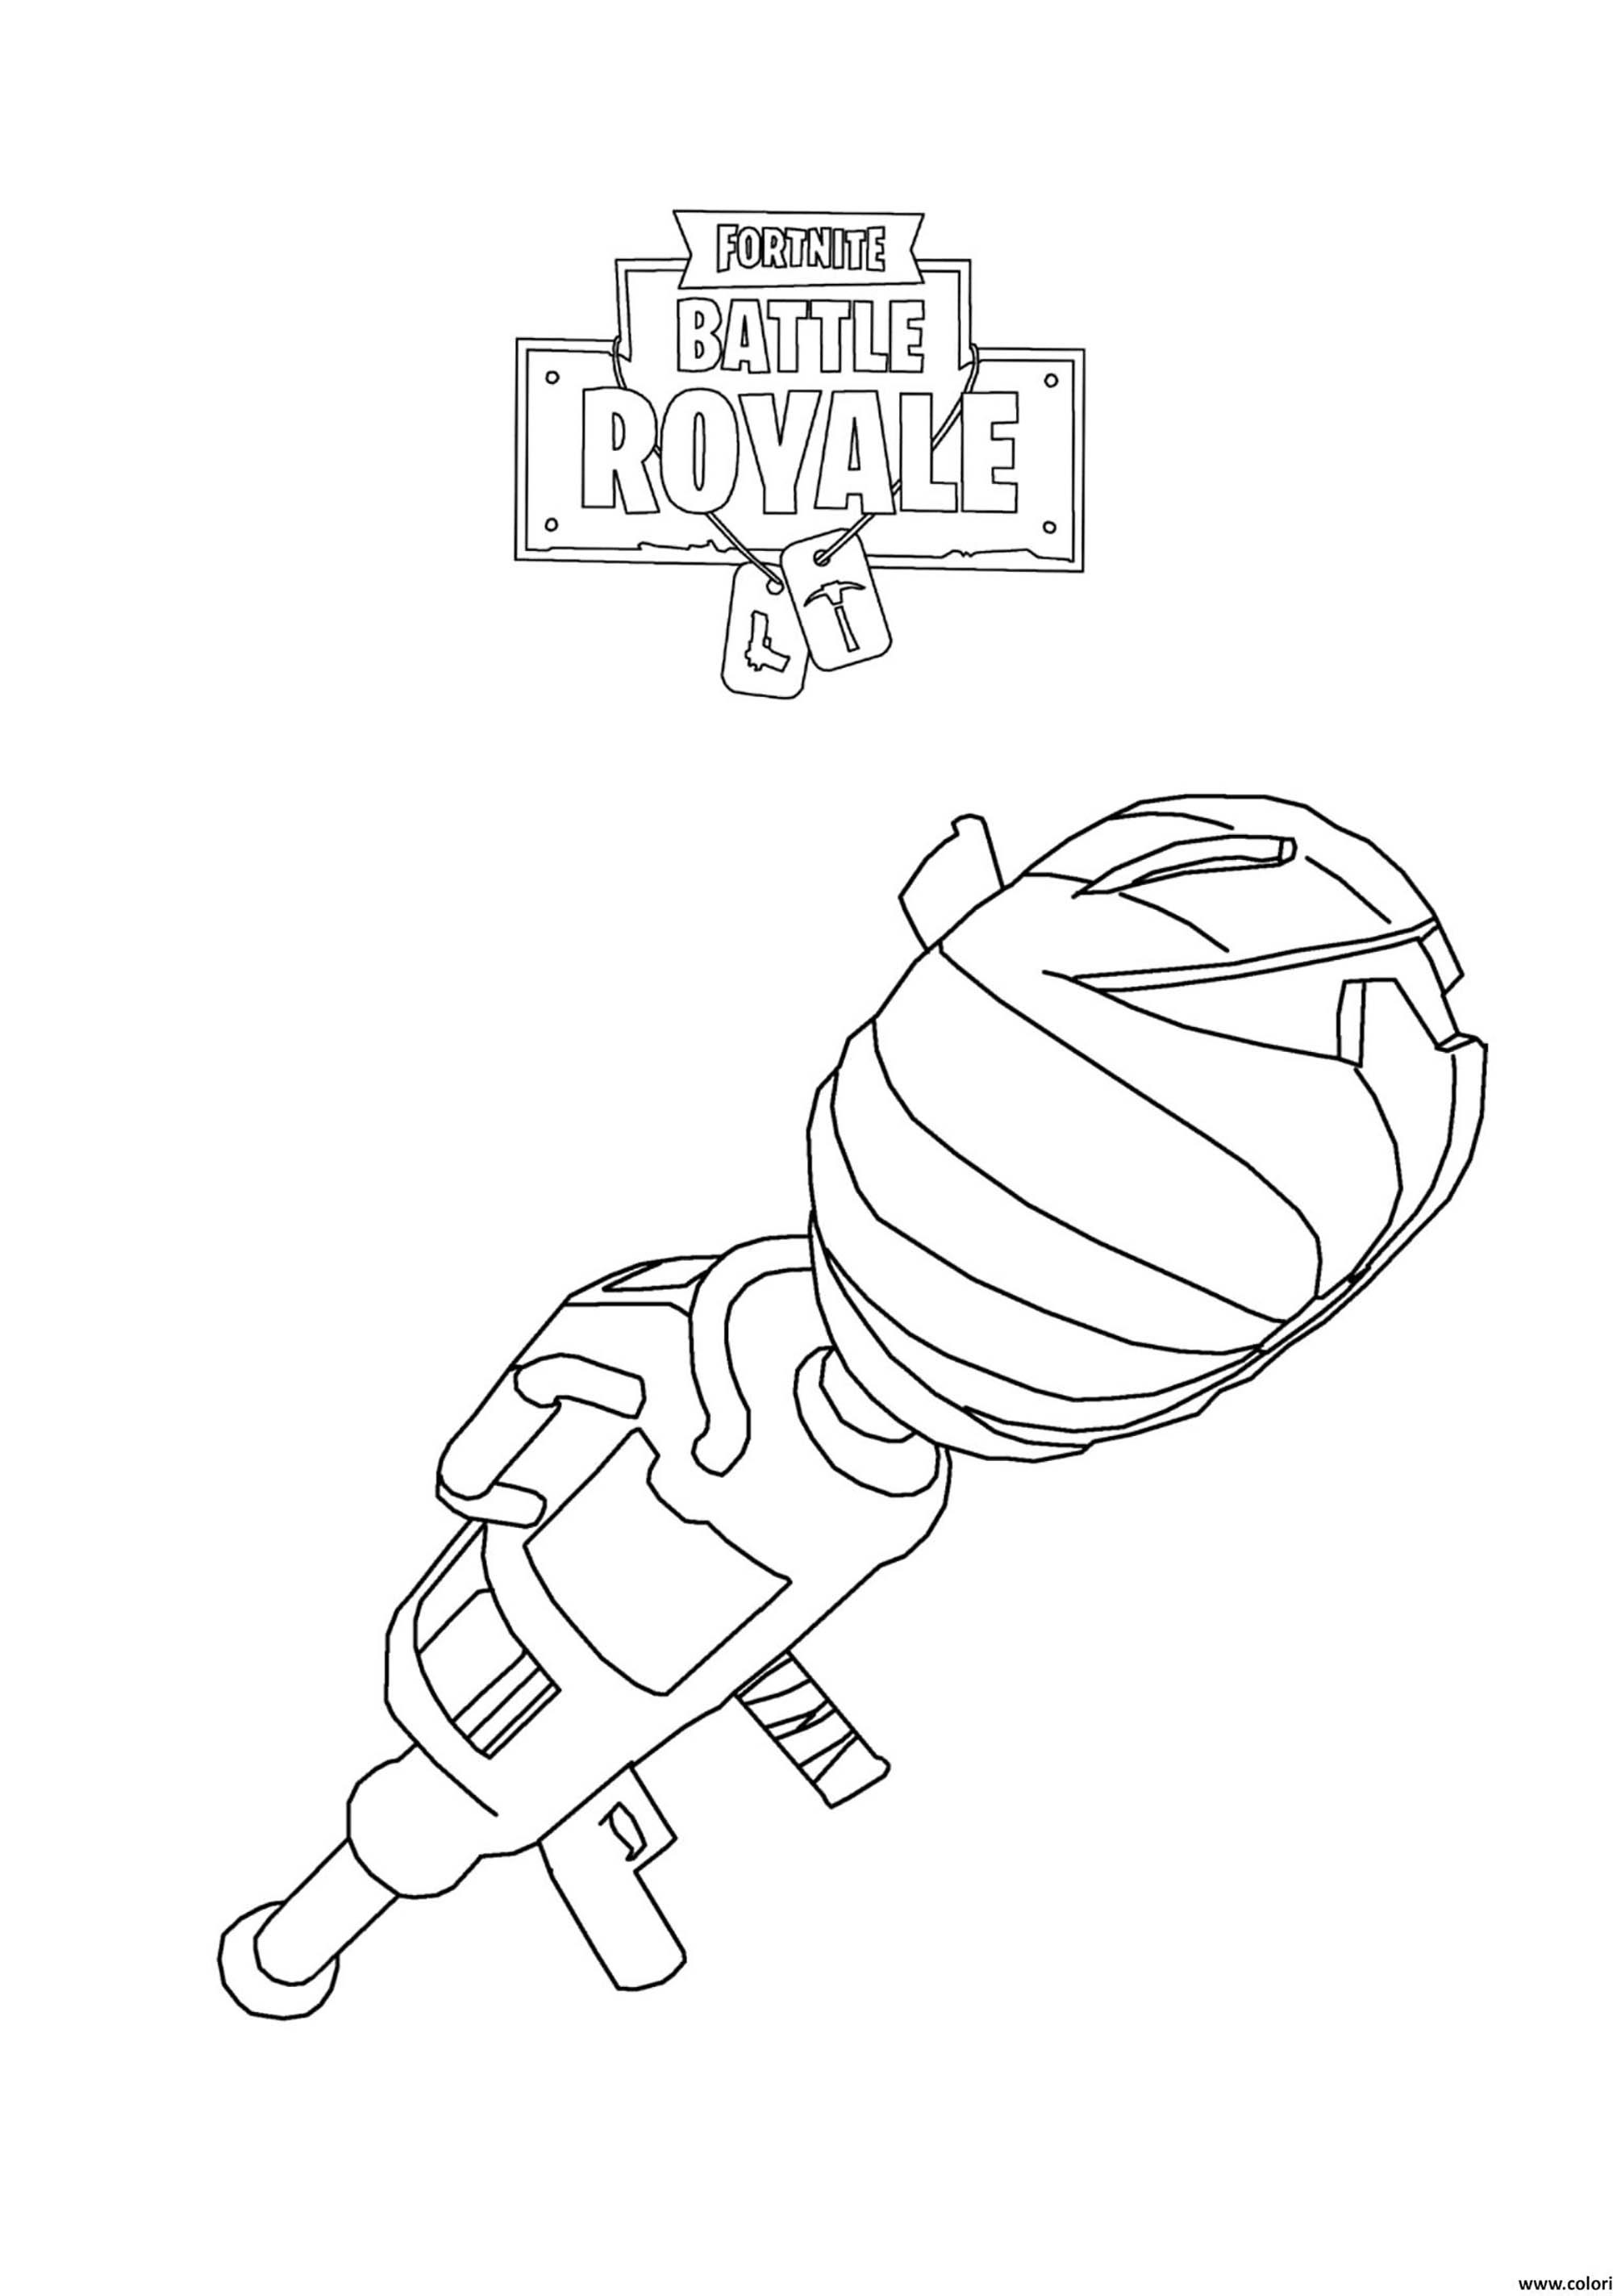 Coloring Fortnite Battle Royale Logo - Fortnite Battle Royale : Rocket Launcher - Fortnite Battle Royale ...